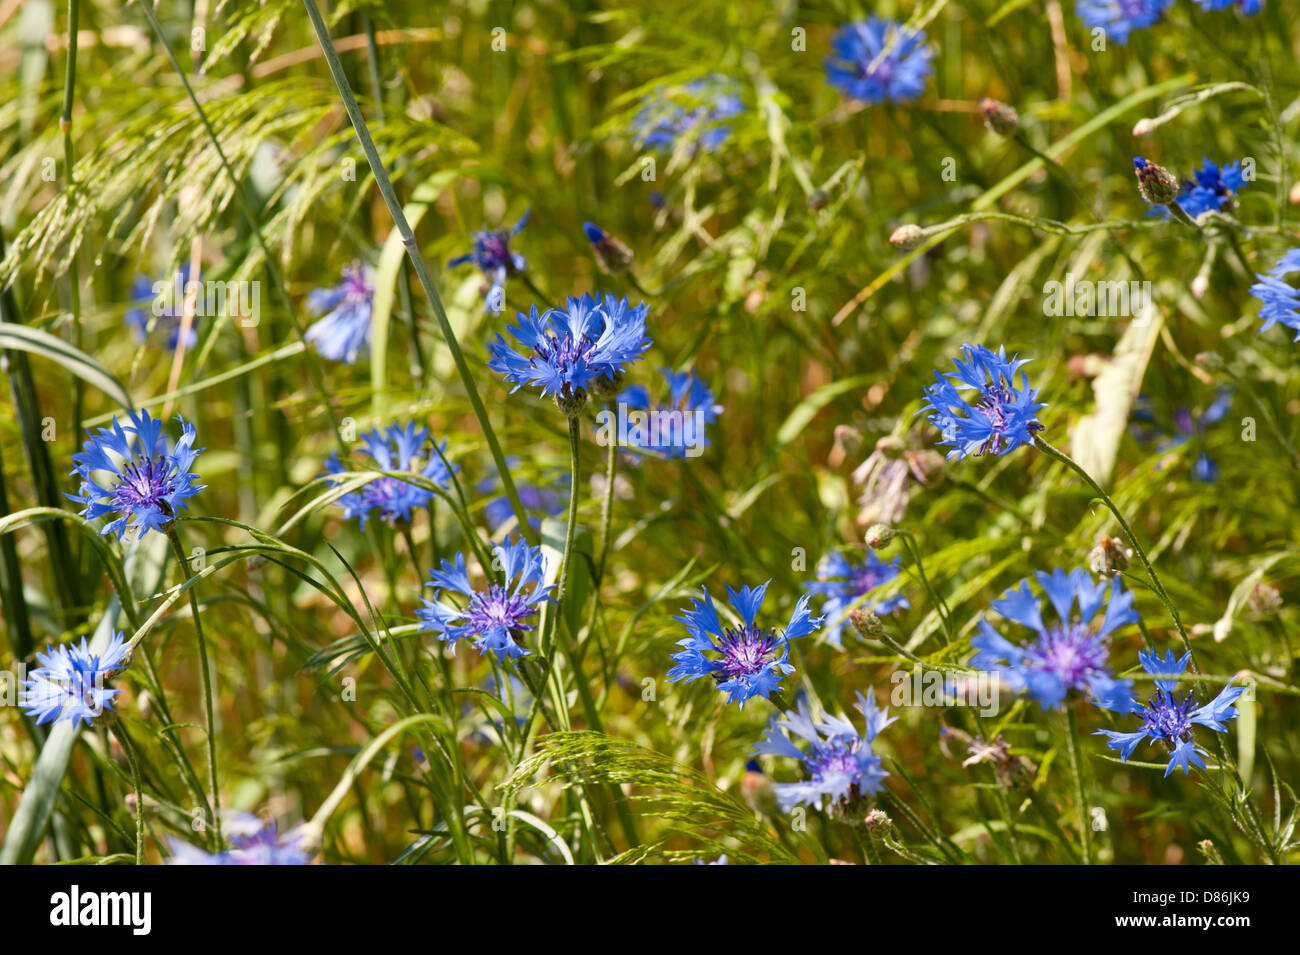 Centaurea cyanus or Cornflower blue plants Stock Photo